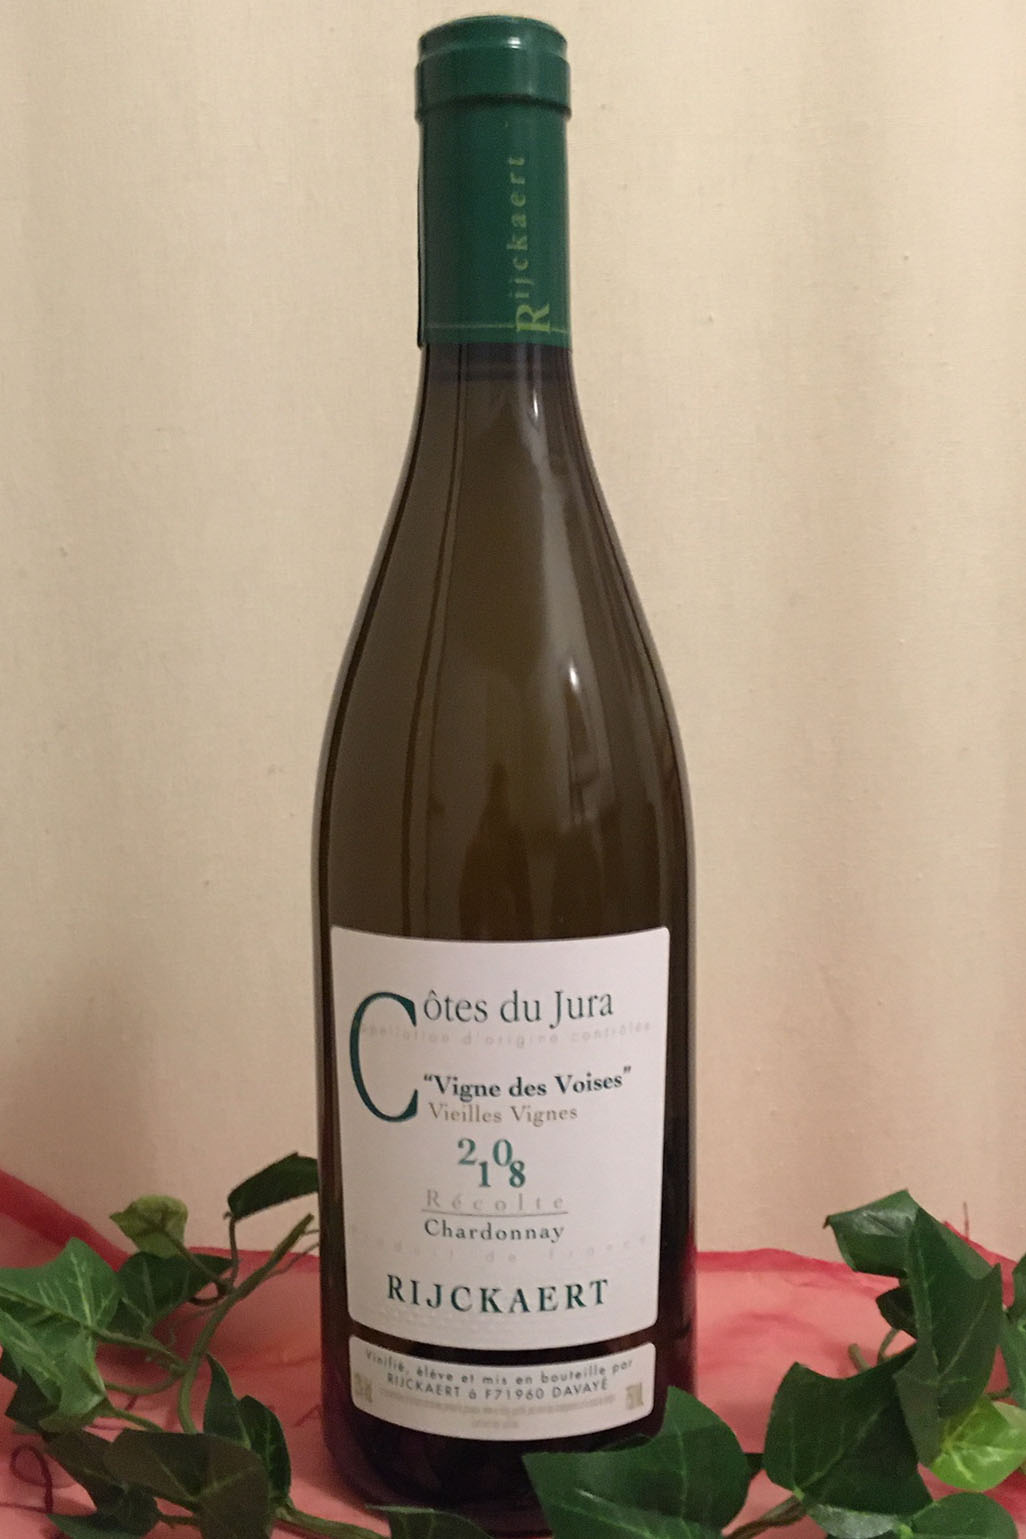 2018 Côte du Jura Vignes des Voises Chardonnay, Vins Rijckaert, Jura